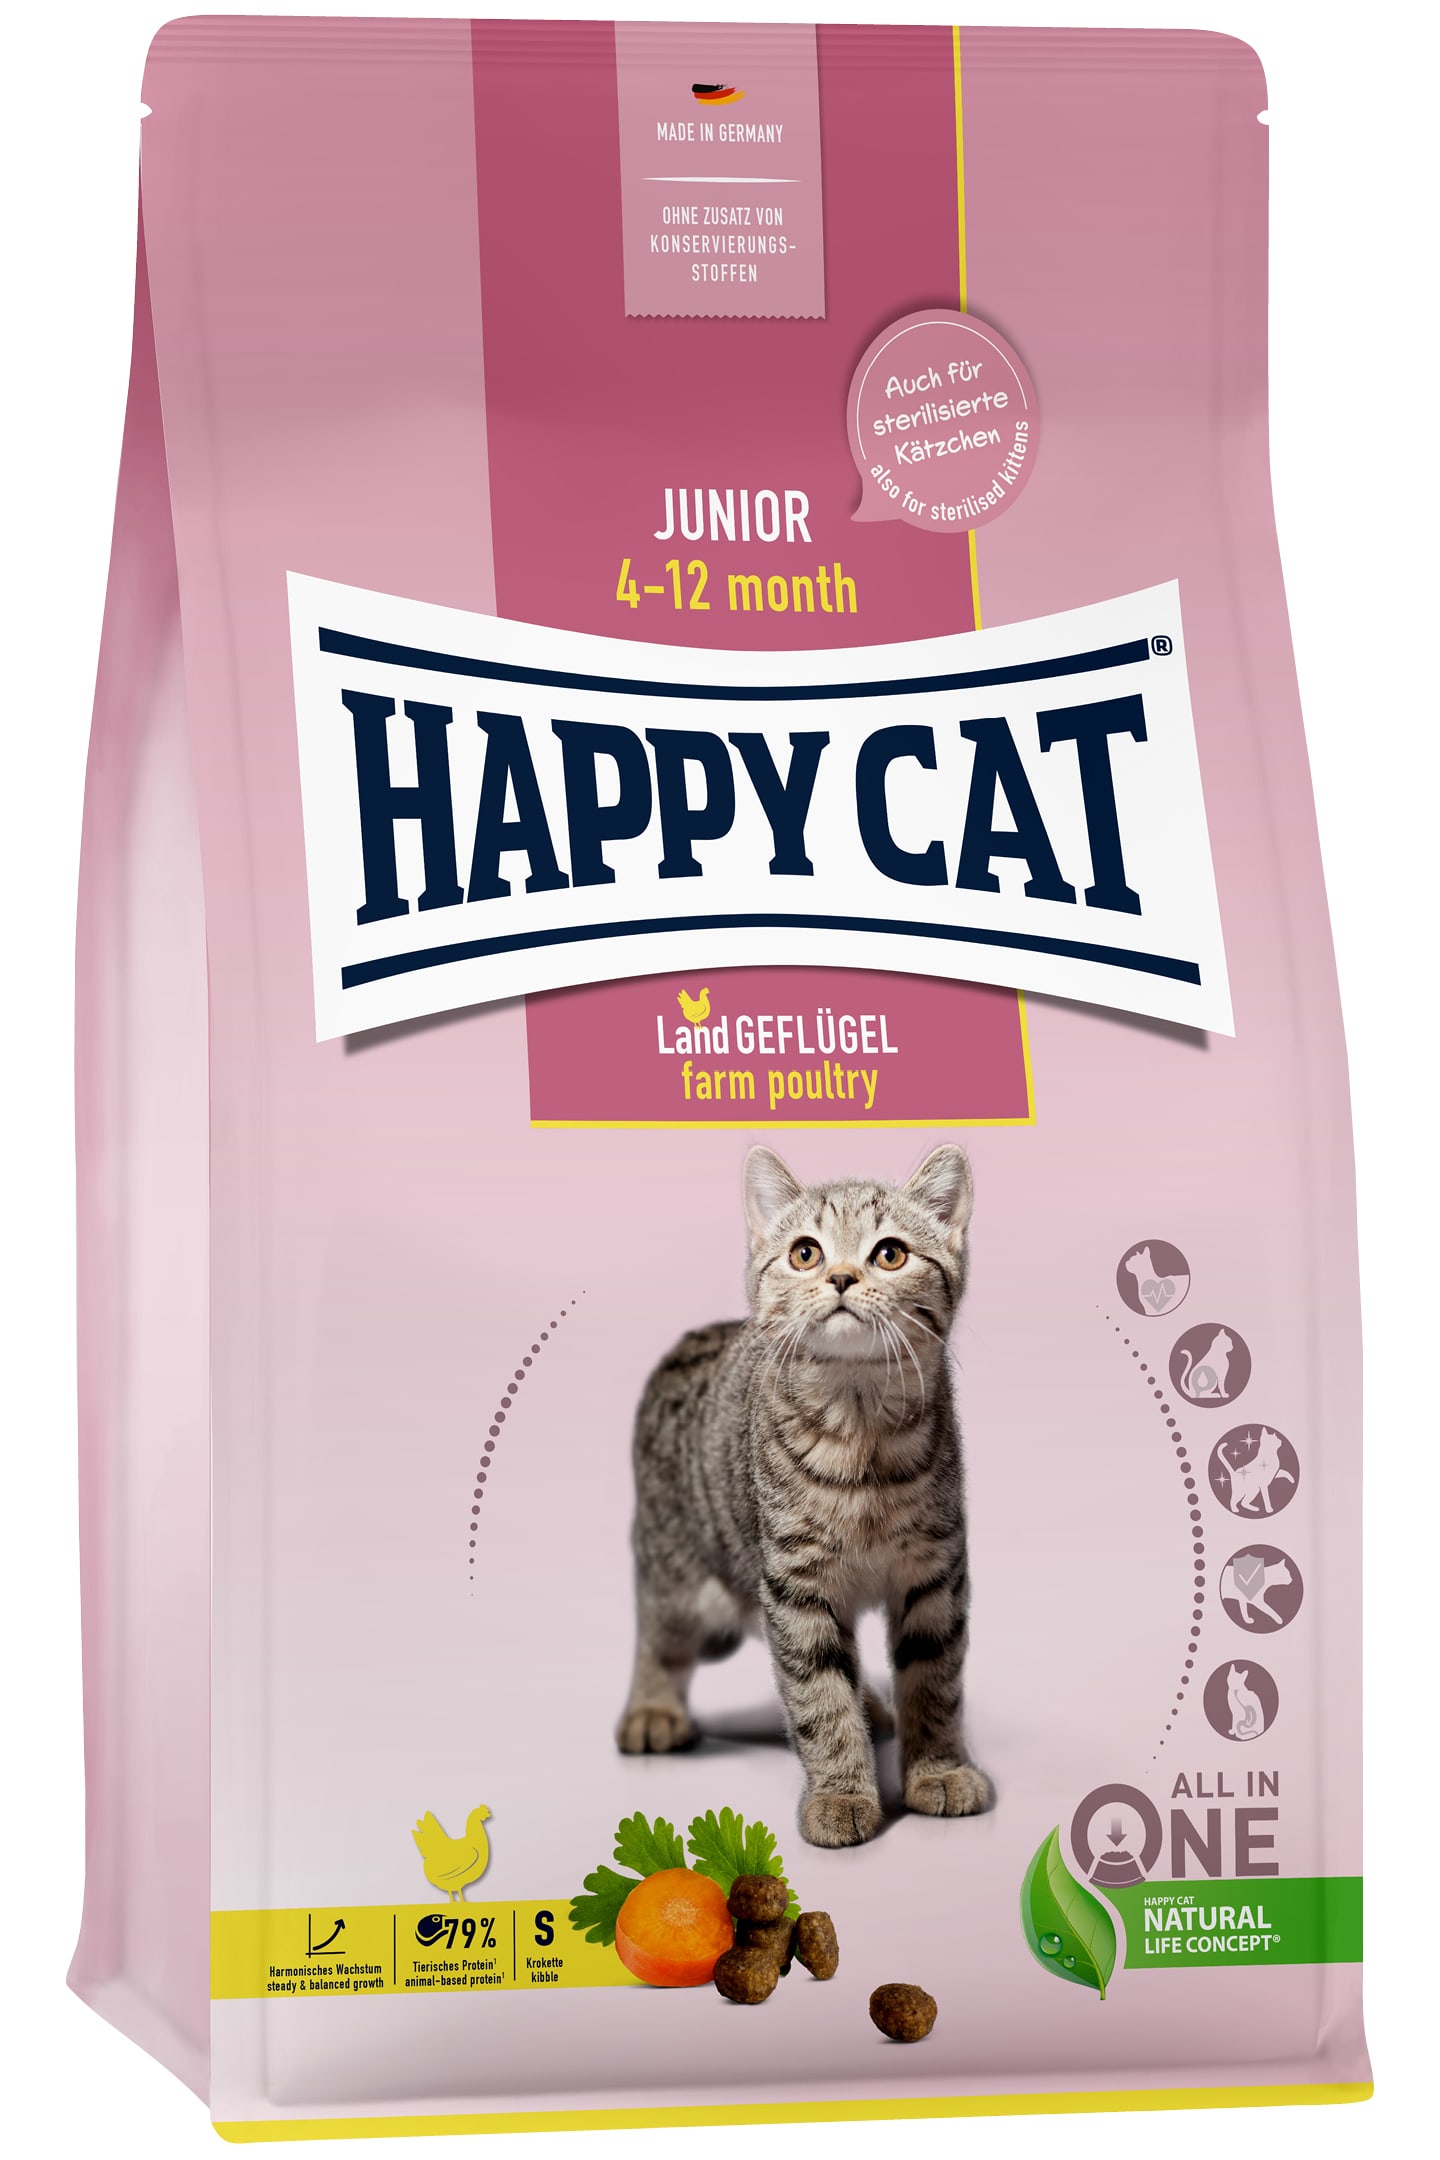 Happy Cat Supreme Young Junior LandGeflügel